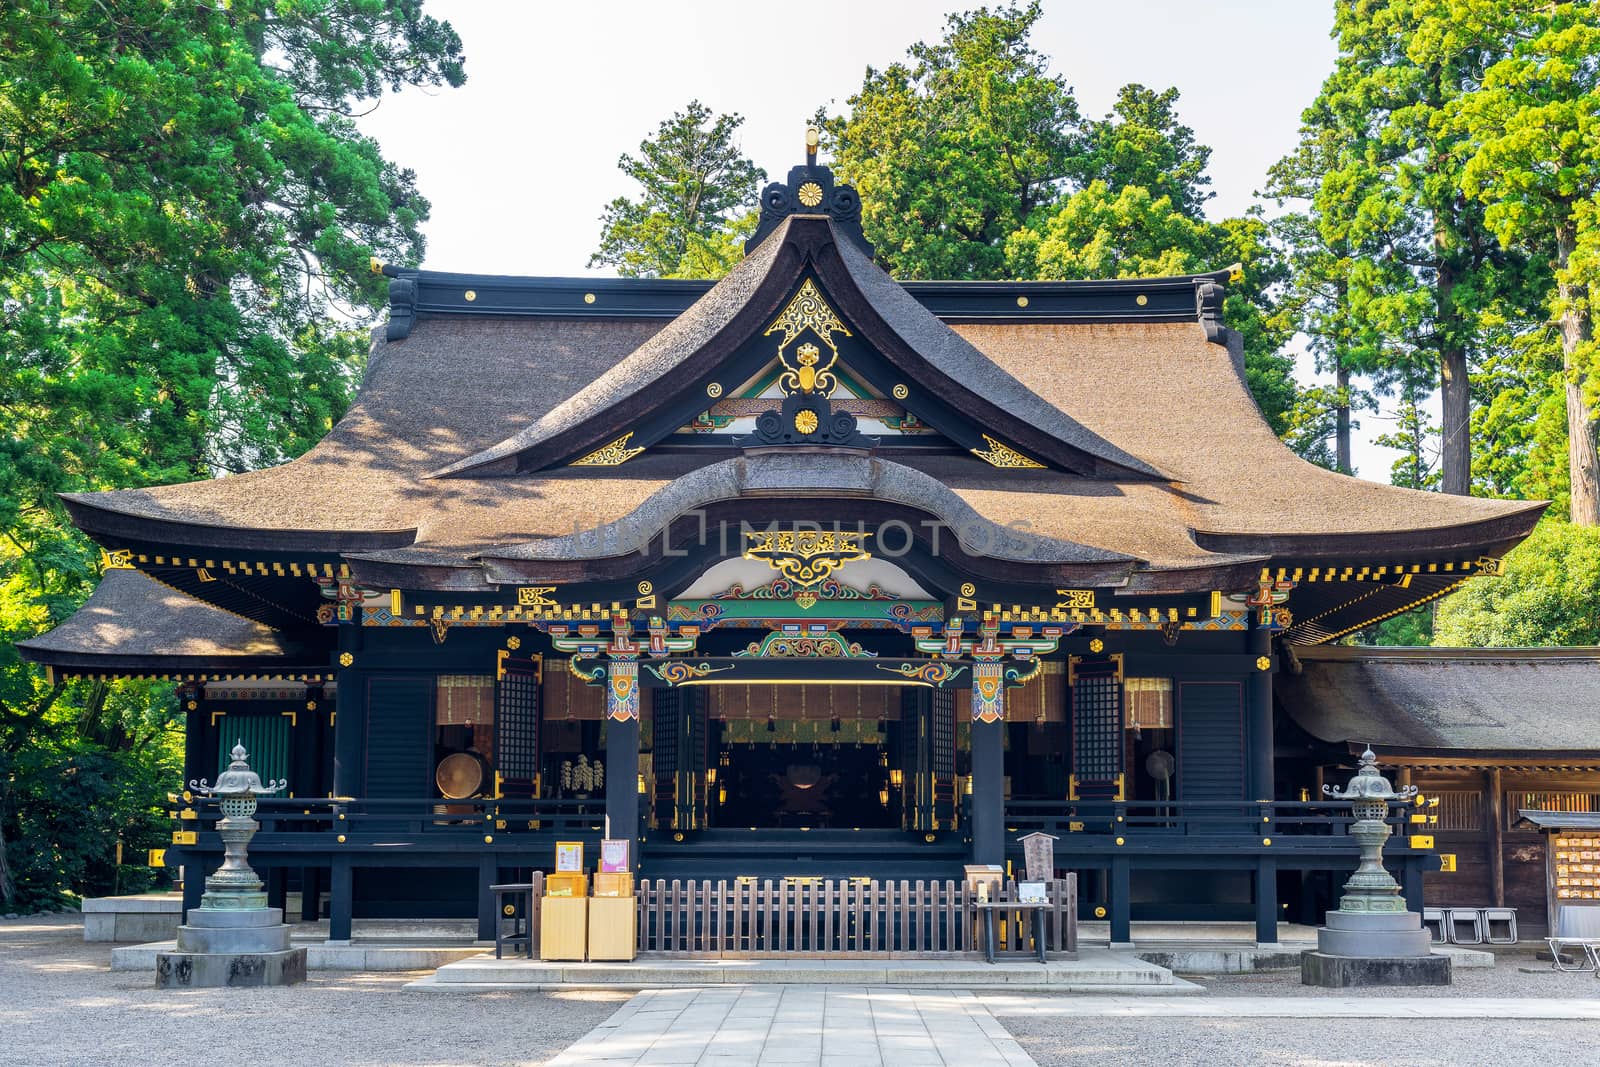 katori shrine in Chiba, Japan.